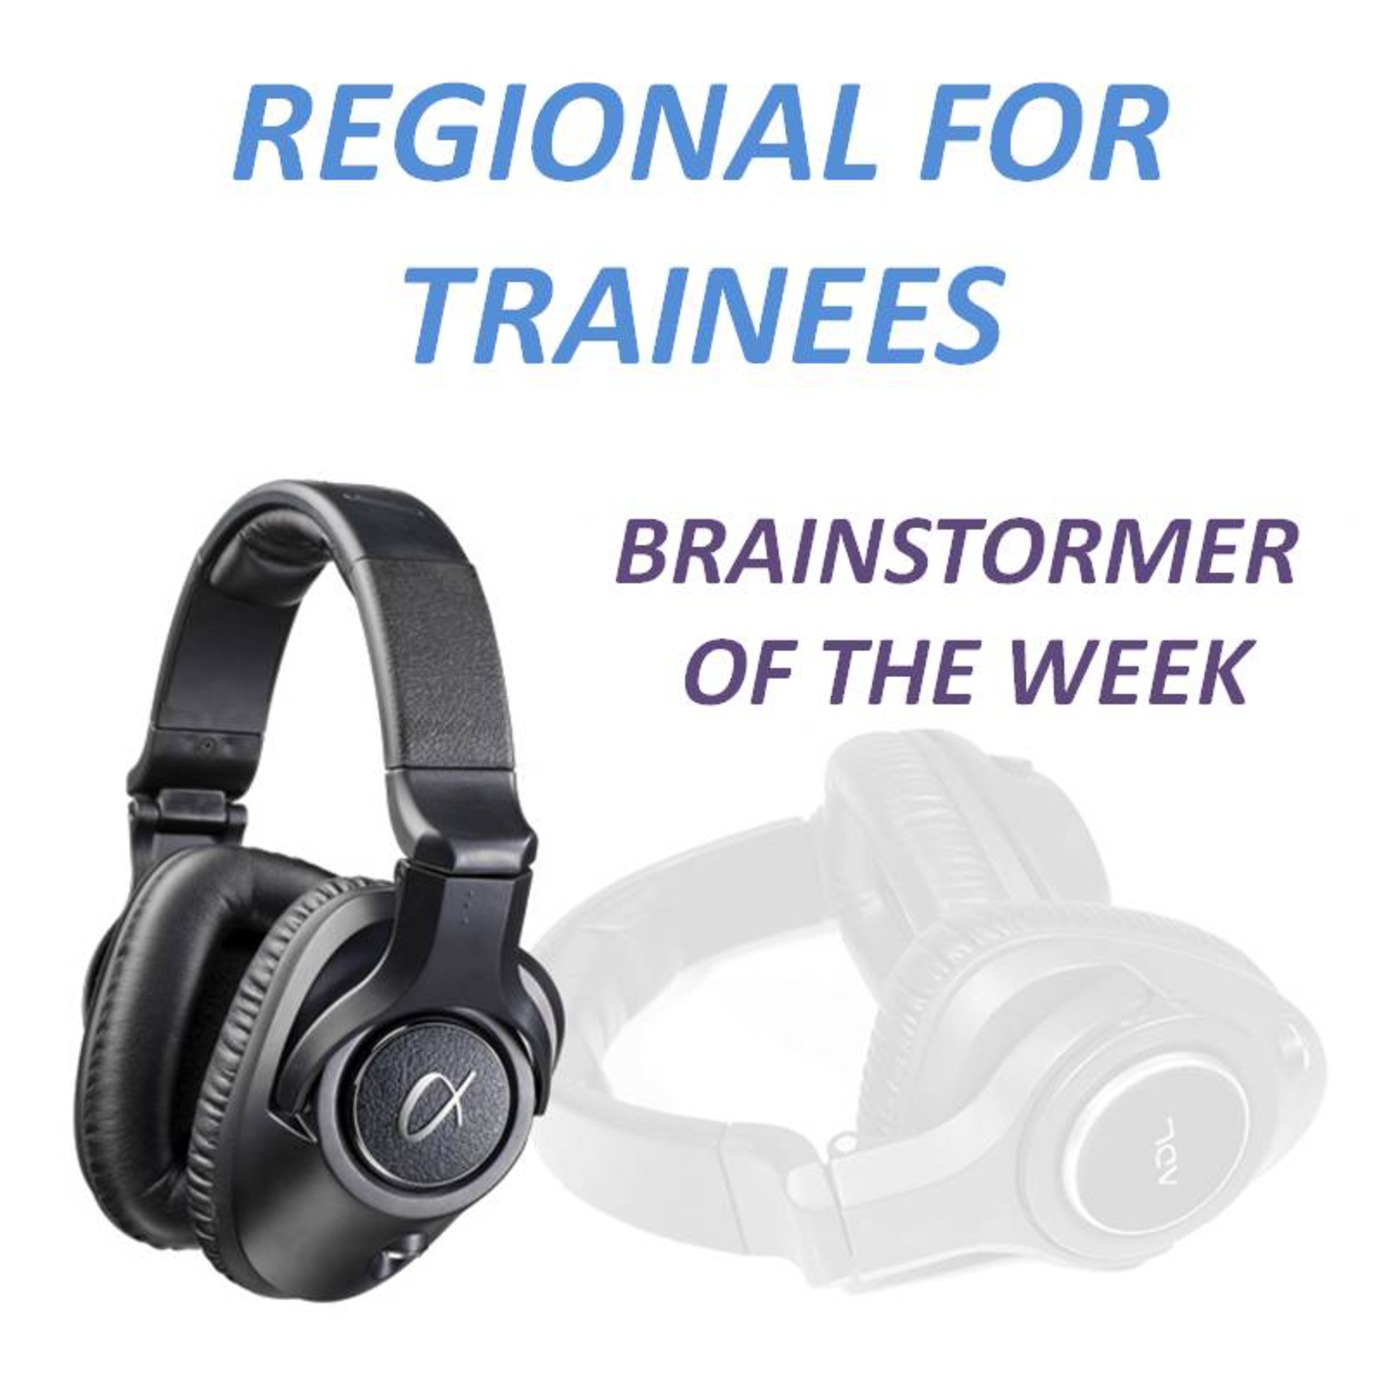 Regional for Trainees: Brainstormer